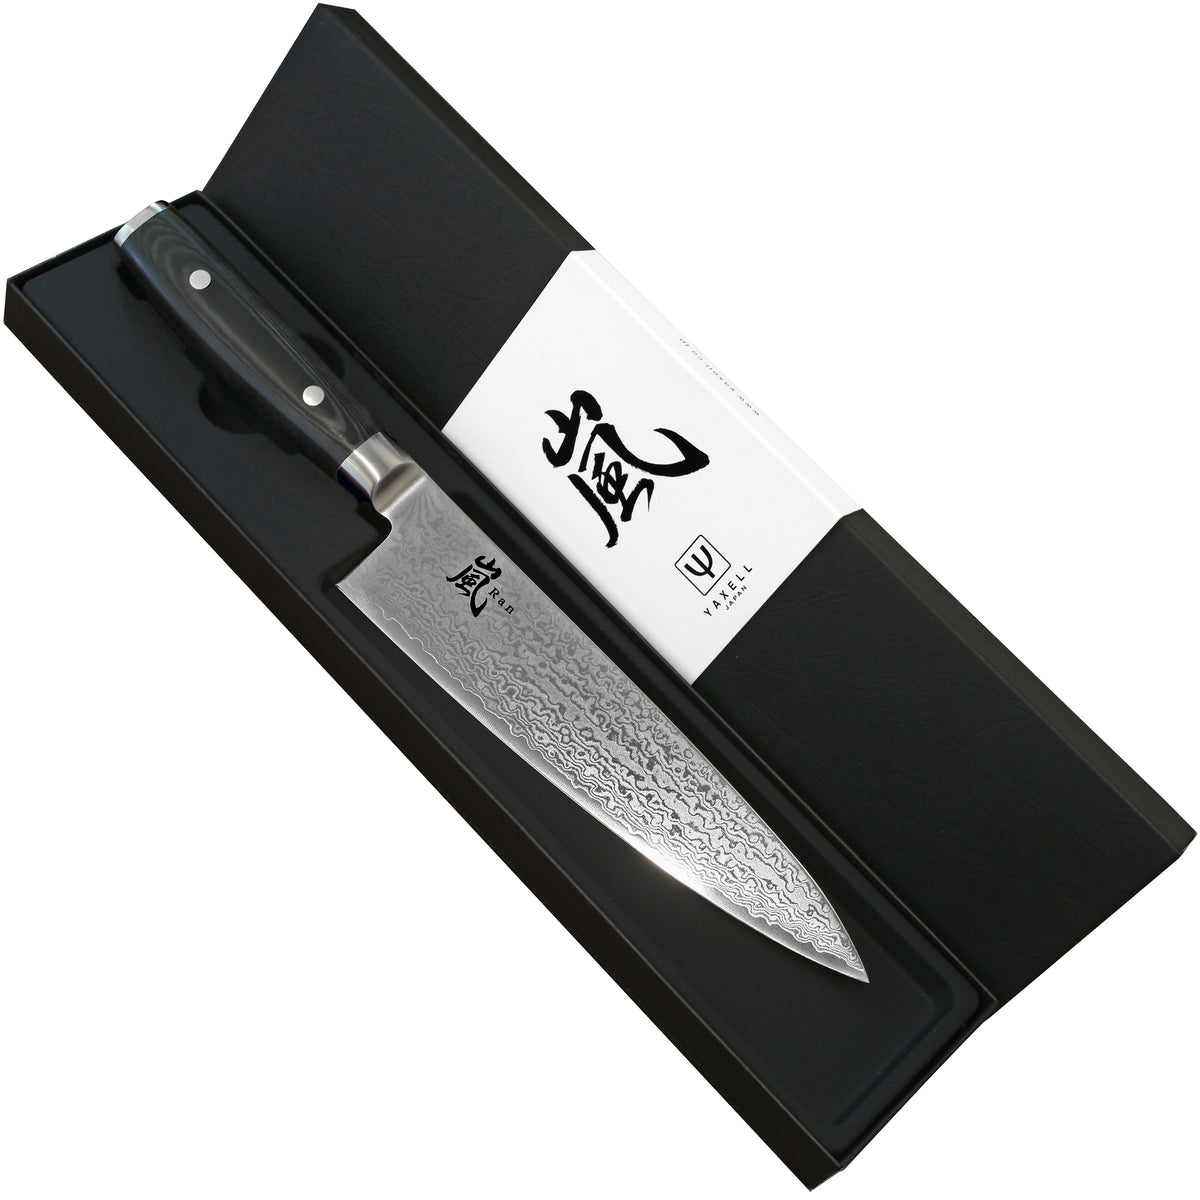 Yaxell Ran Damascus Chef's Knife, 20 cm